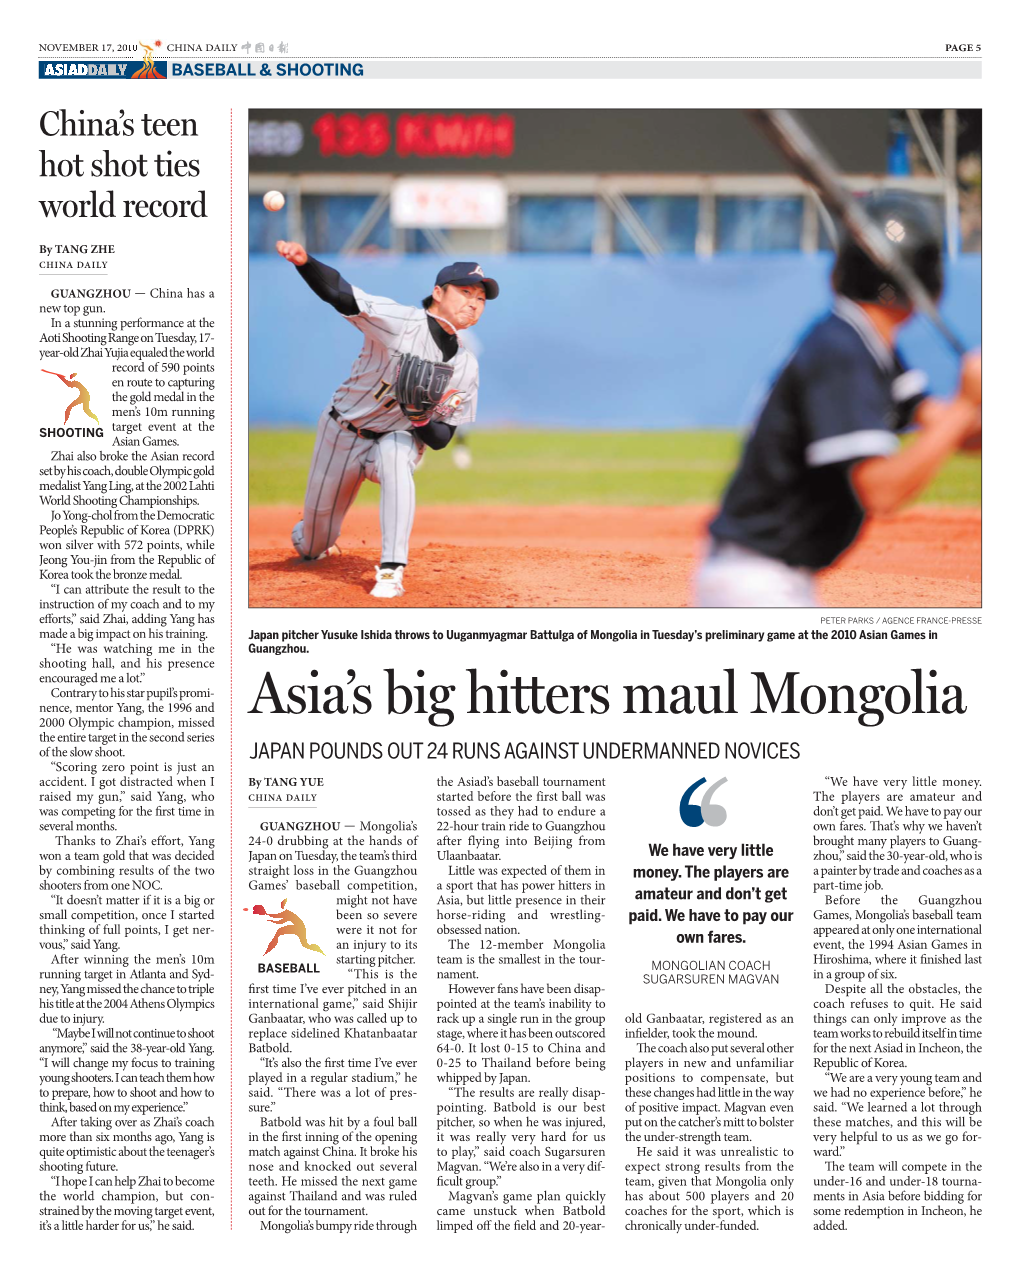 Asia's Big Hitters Maul Mongolia